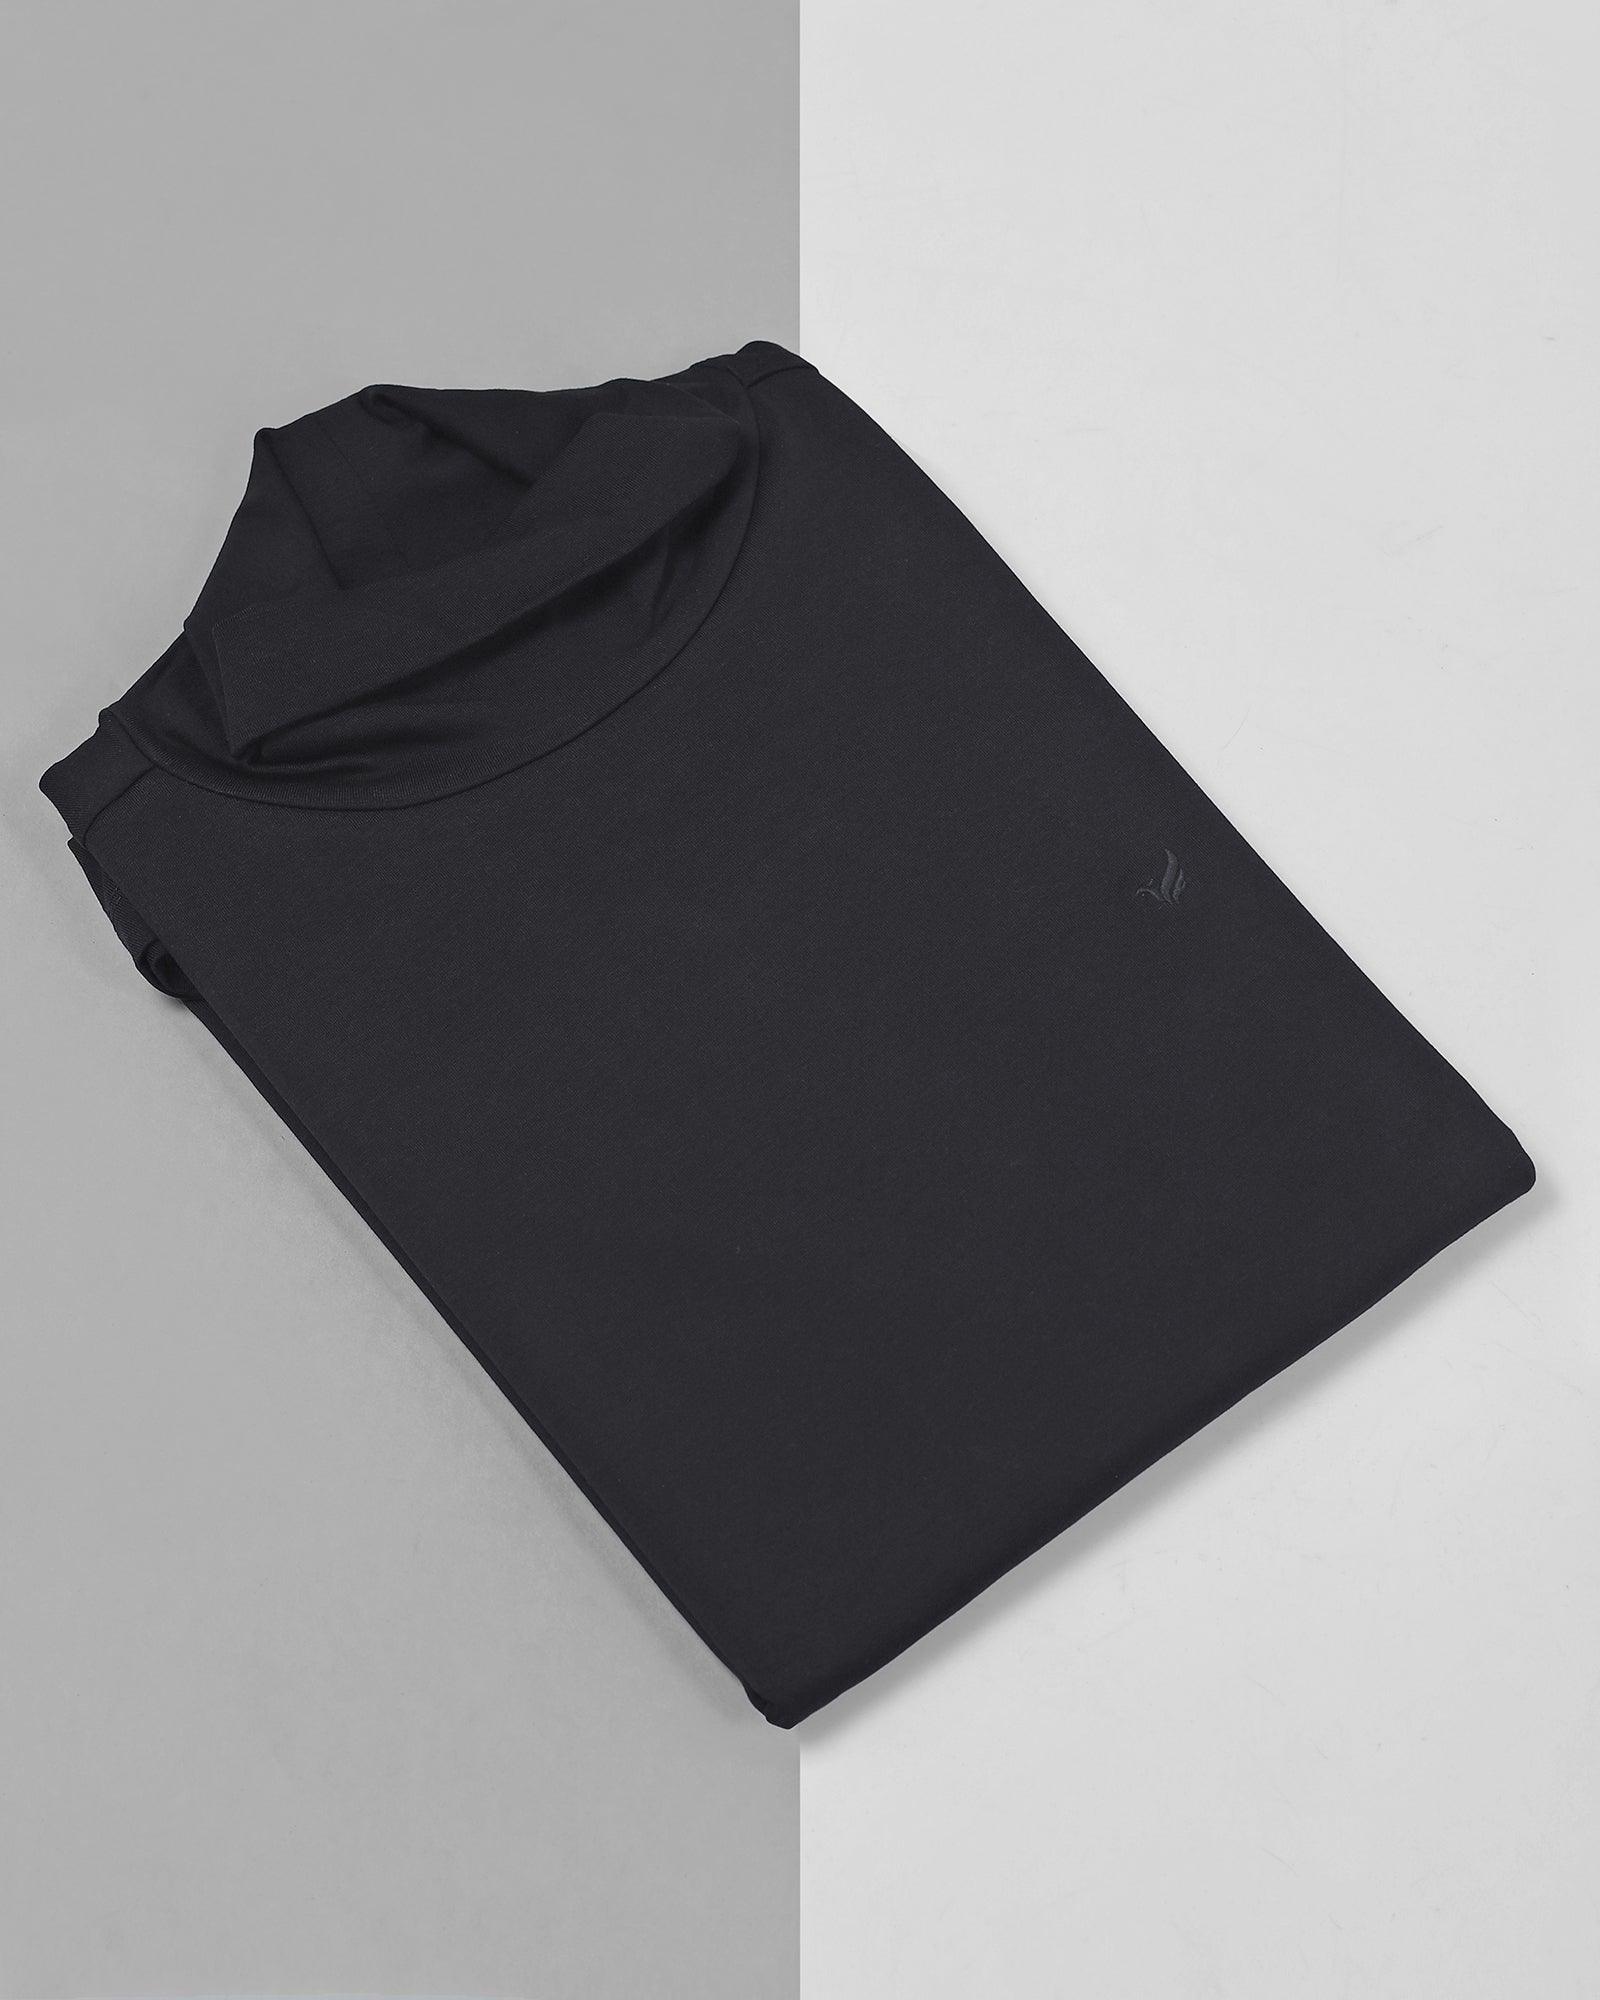 Turtle Neck Black Solid T Shirt - Joe